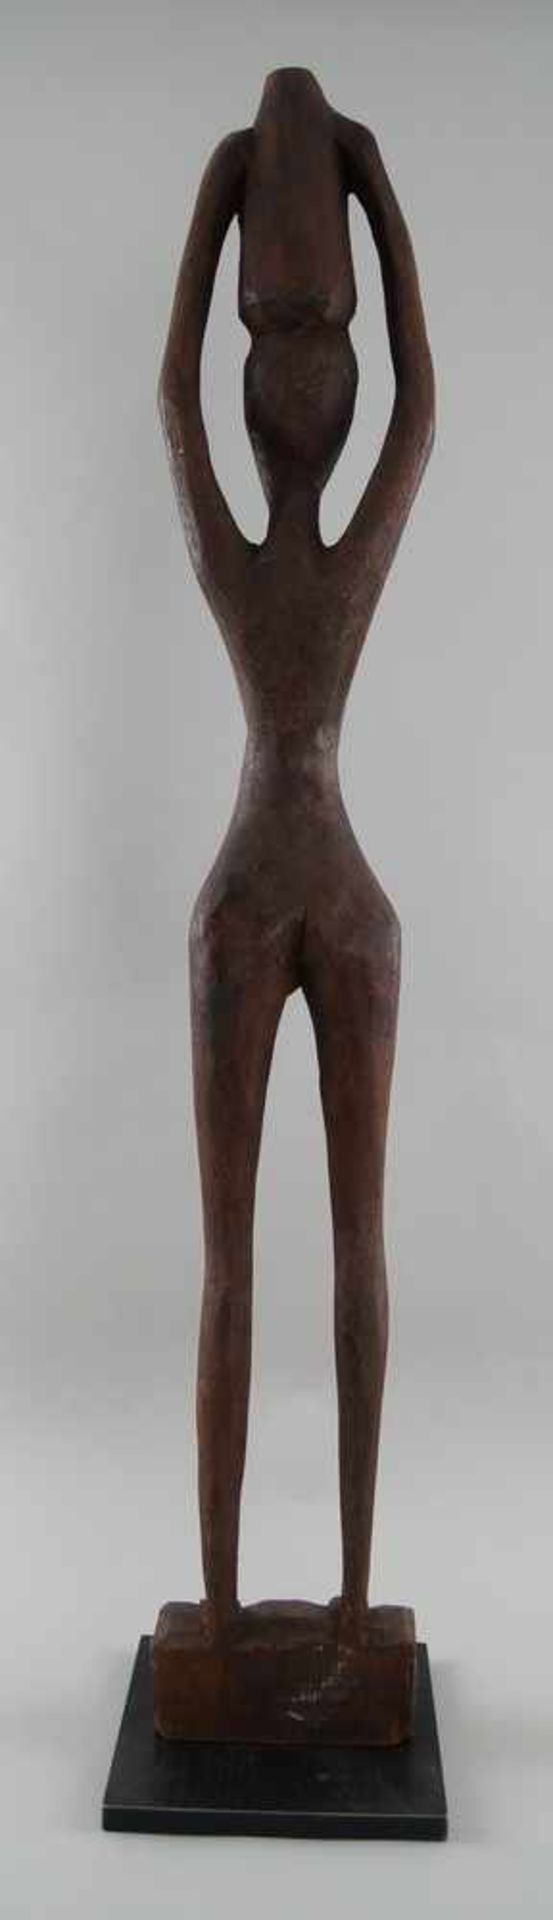 Fruchtbarkeitsskulptur / Ritualskulptur, Holz geschnitzt, Umbanda/Quimbanda-Brasilien, H102 cm - Bild 5 aus 5